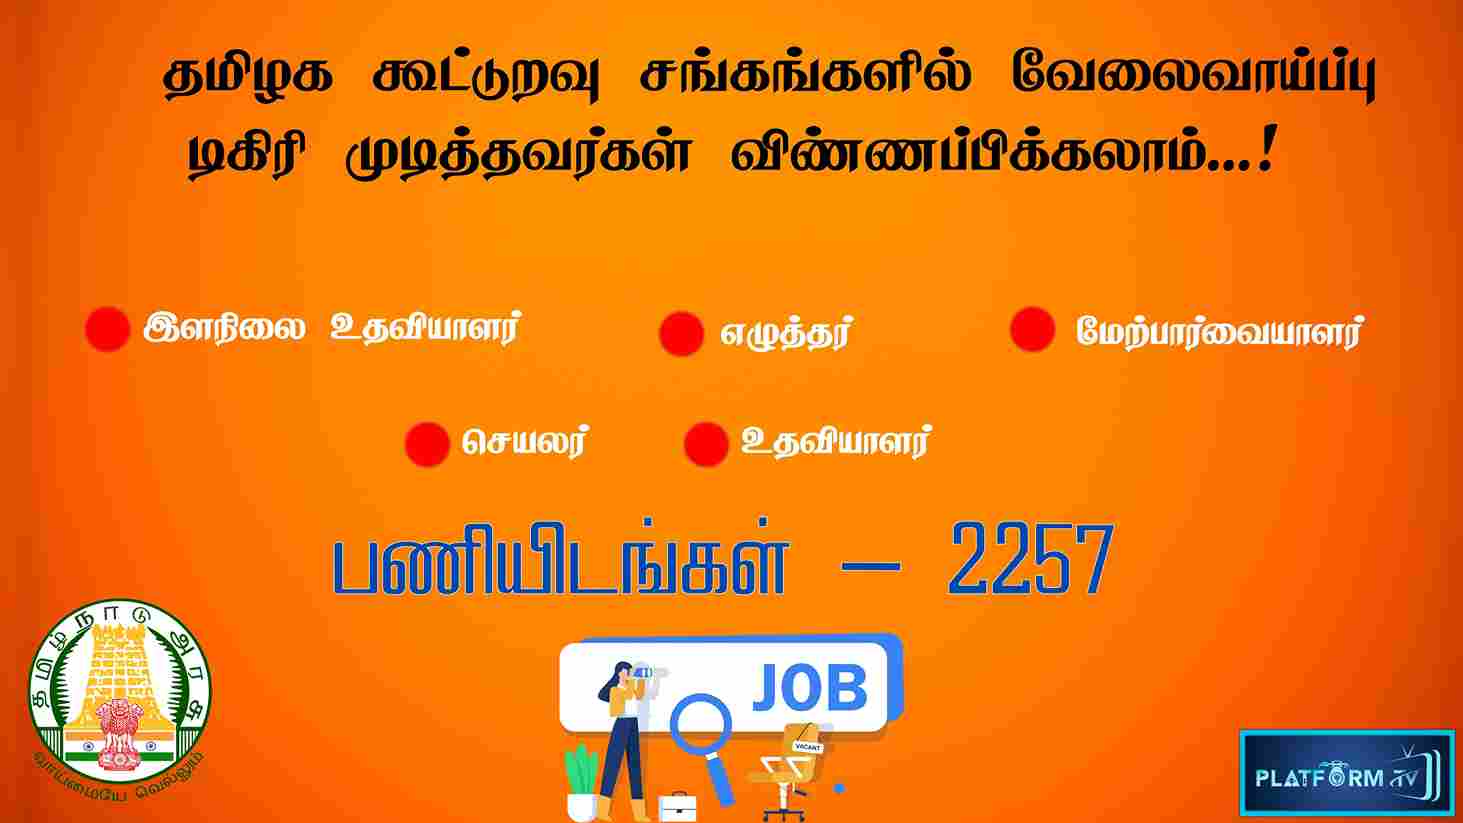 Cooperative Society Job - Platform Tamil